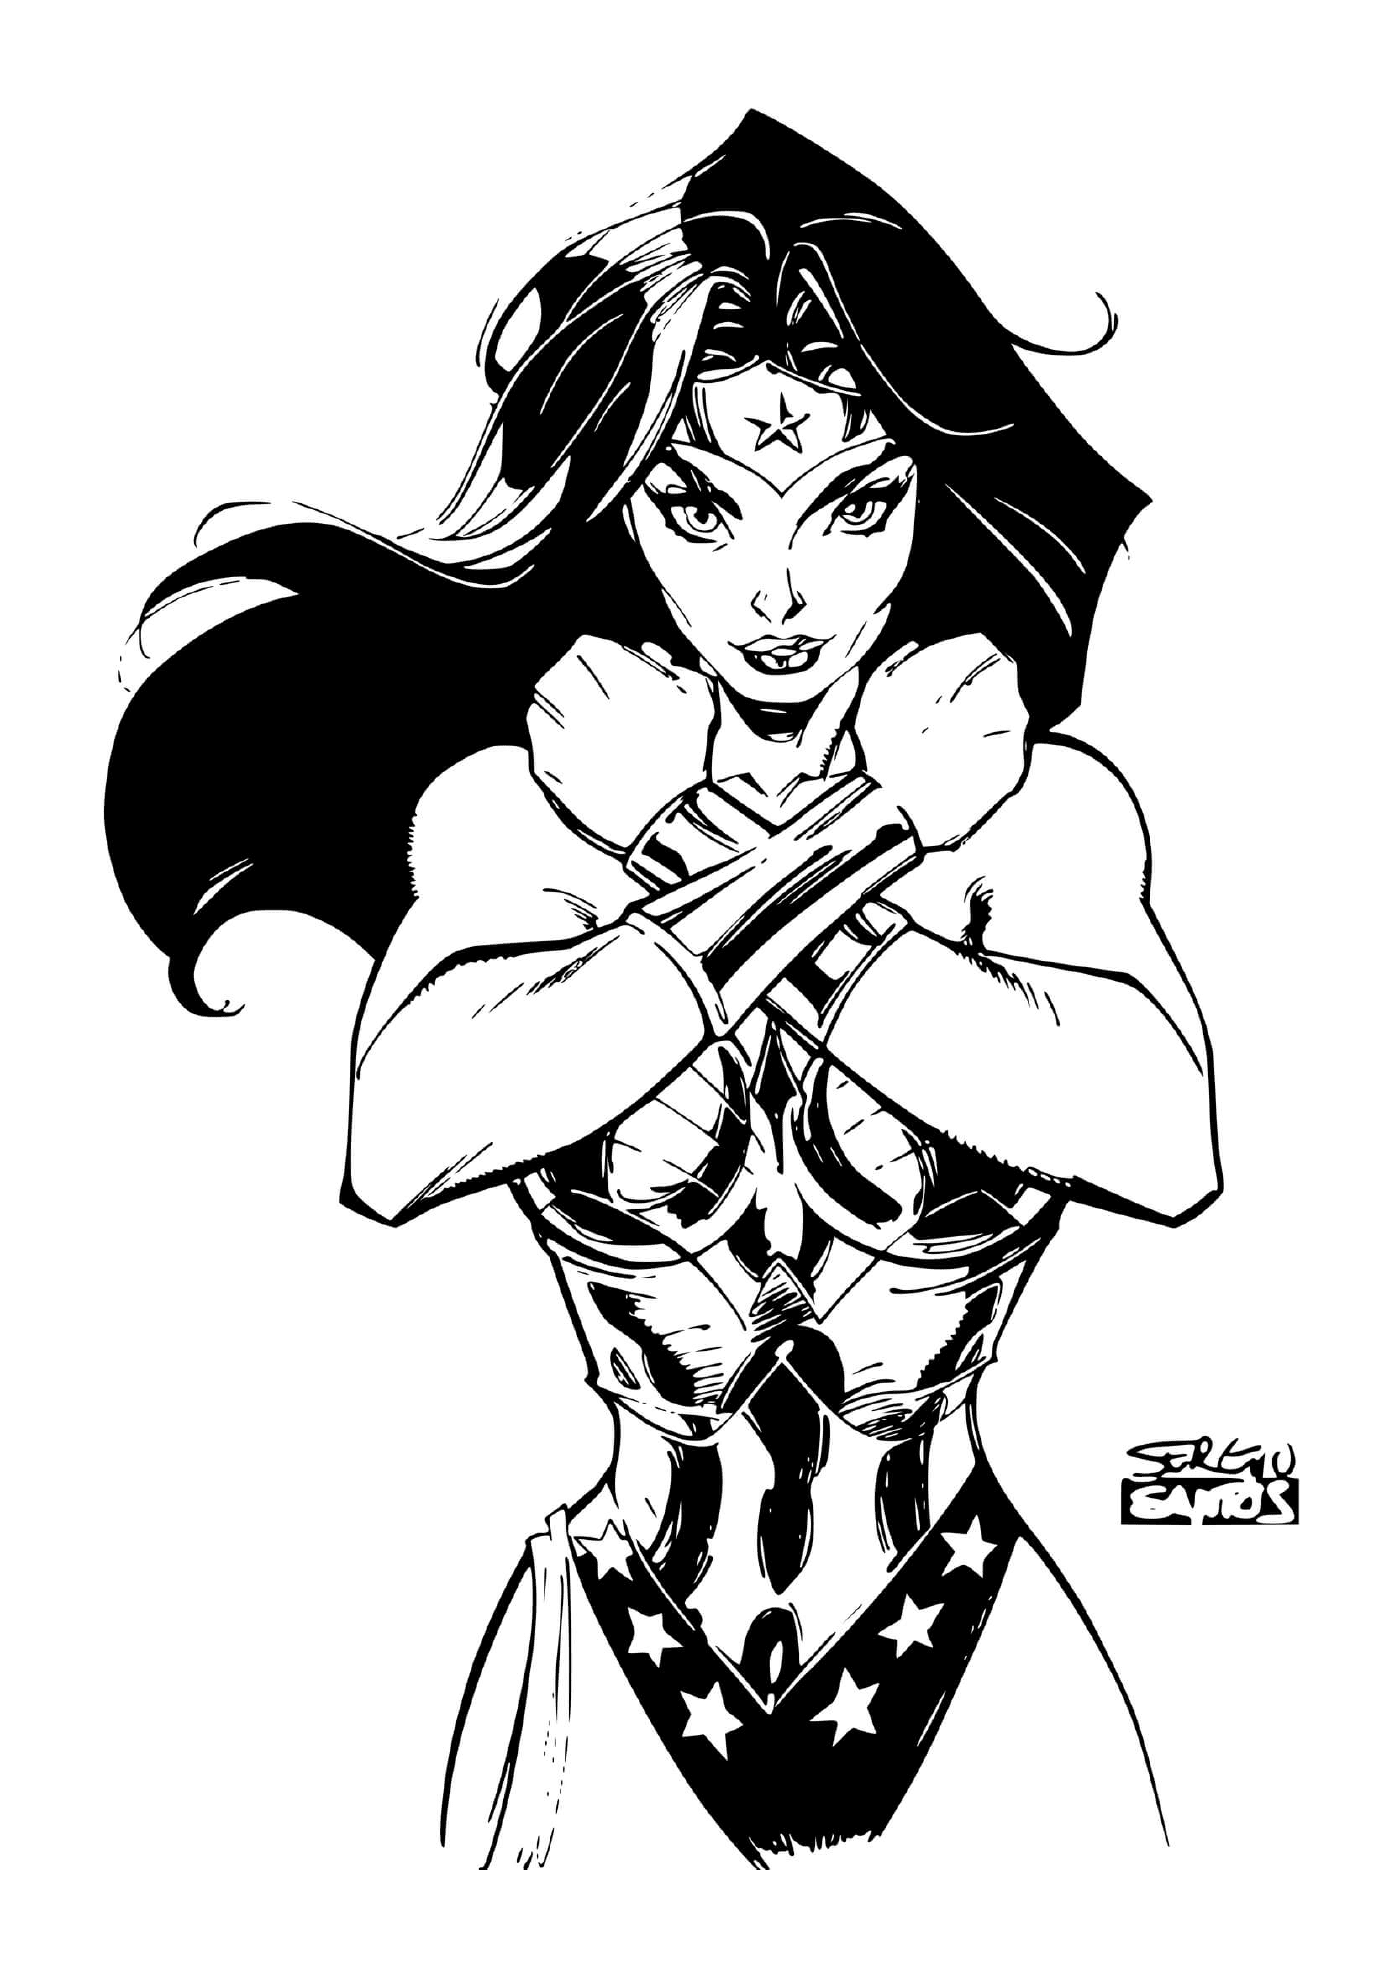   Wonder Woman par Sergioxantos 